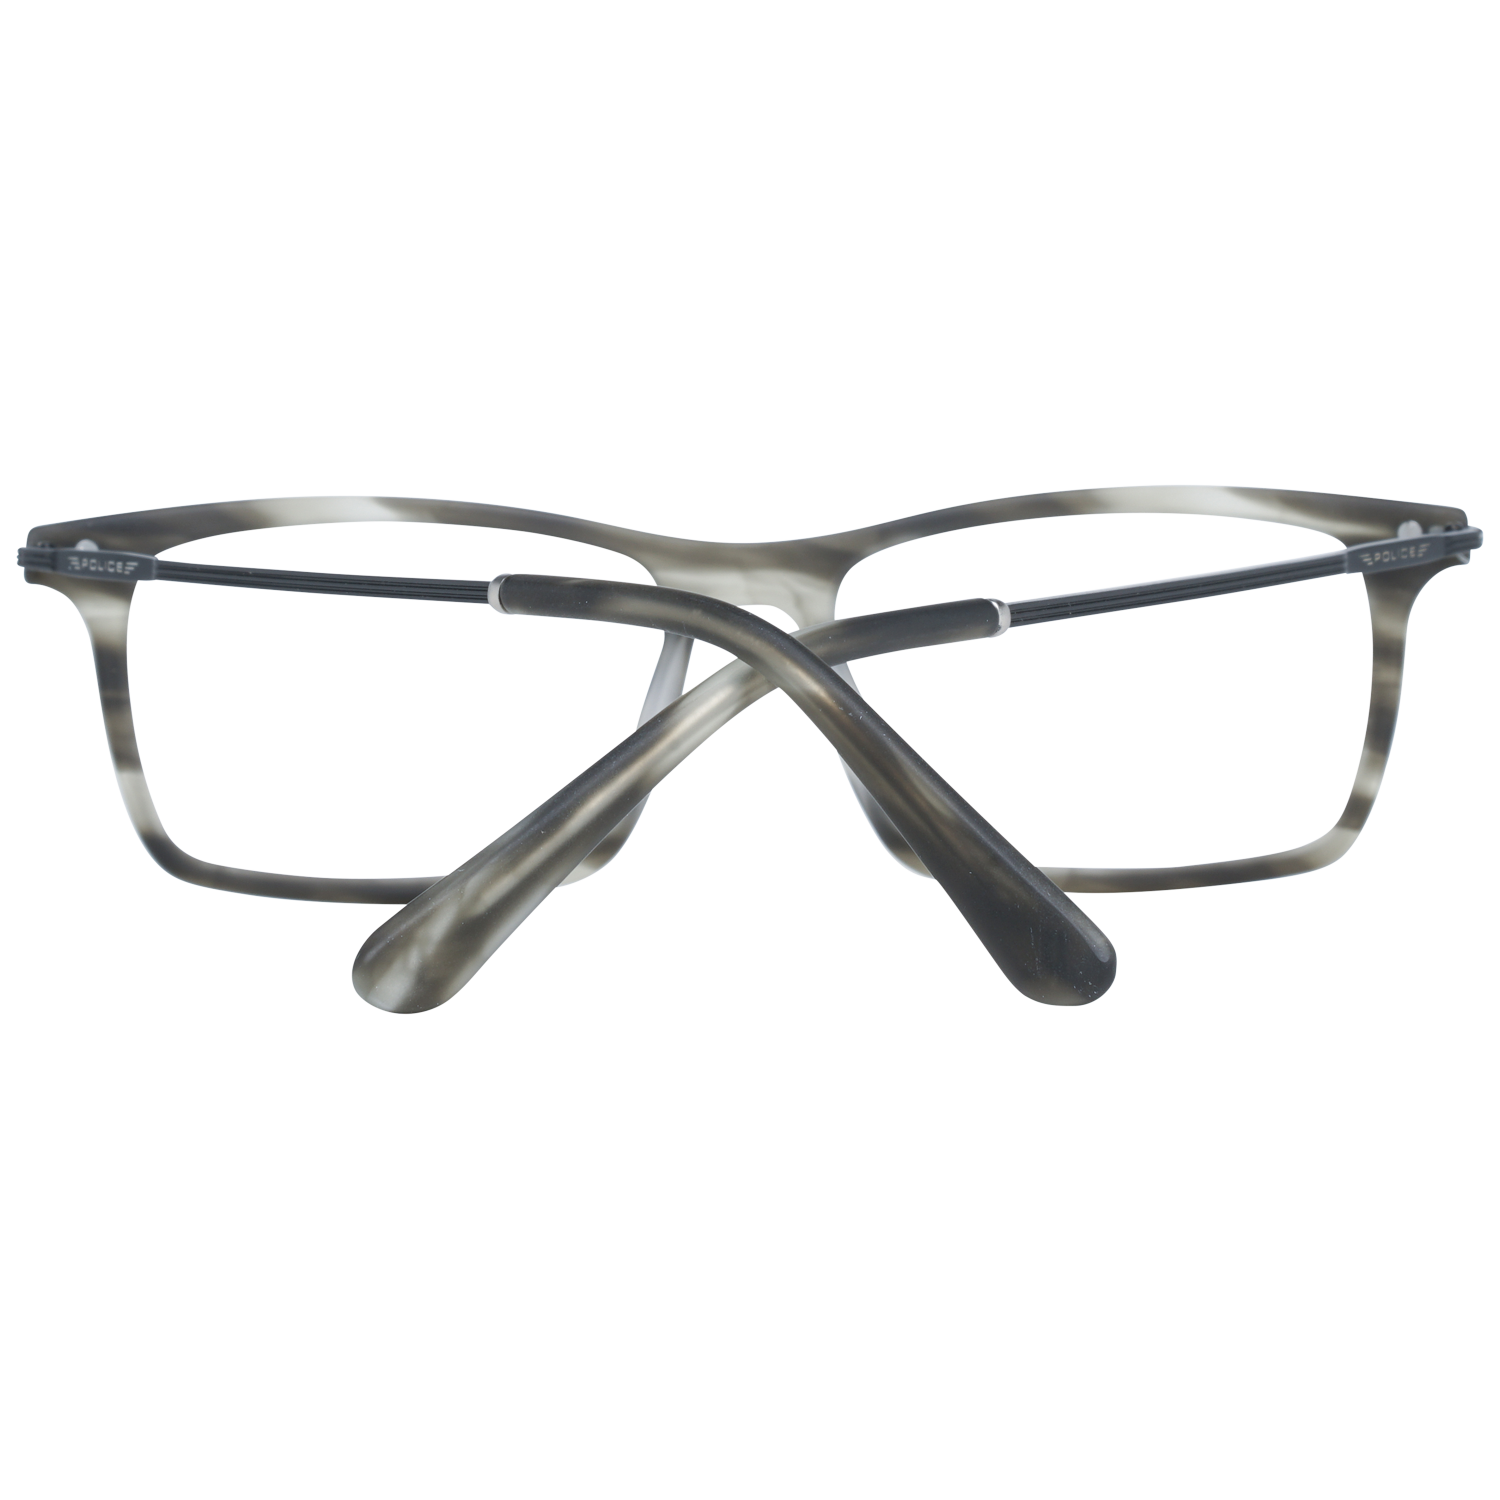 Police Frames Police Glasses Frames VPL473 4ATM 52 Eyeglasses Eyewear UK USA Australia 